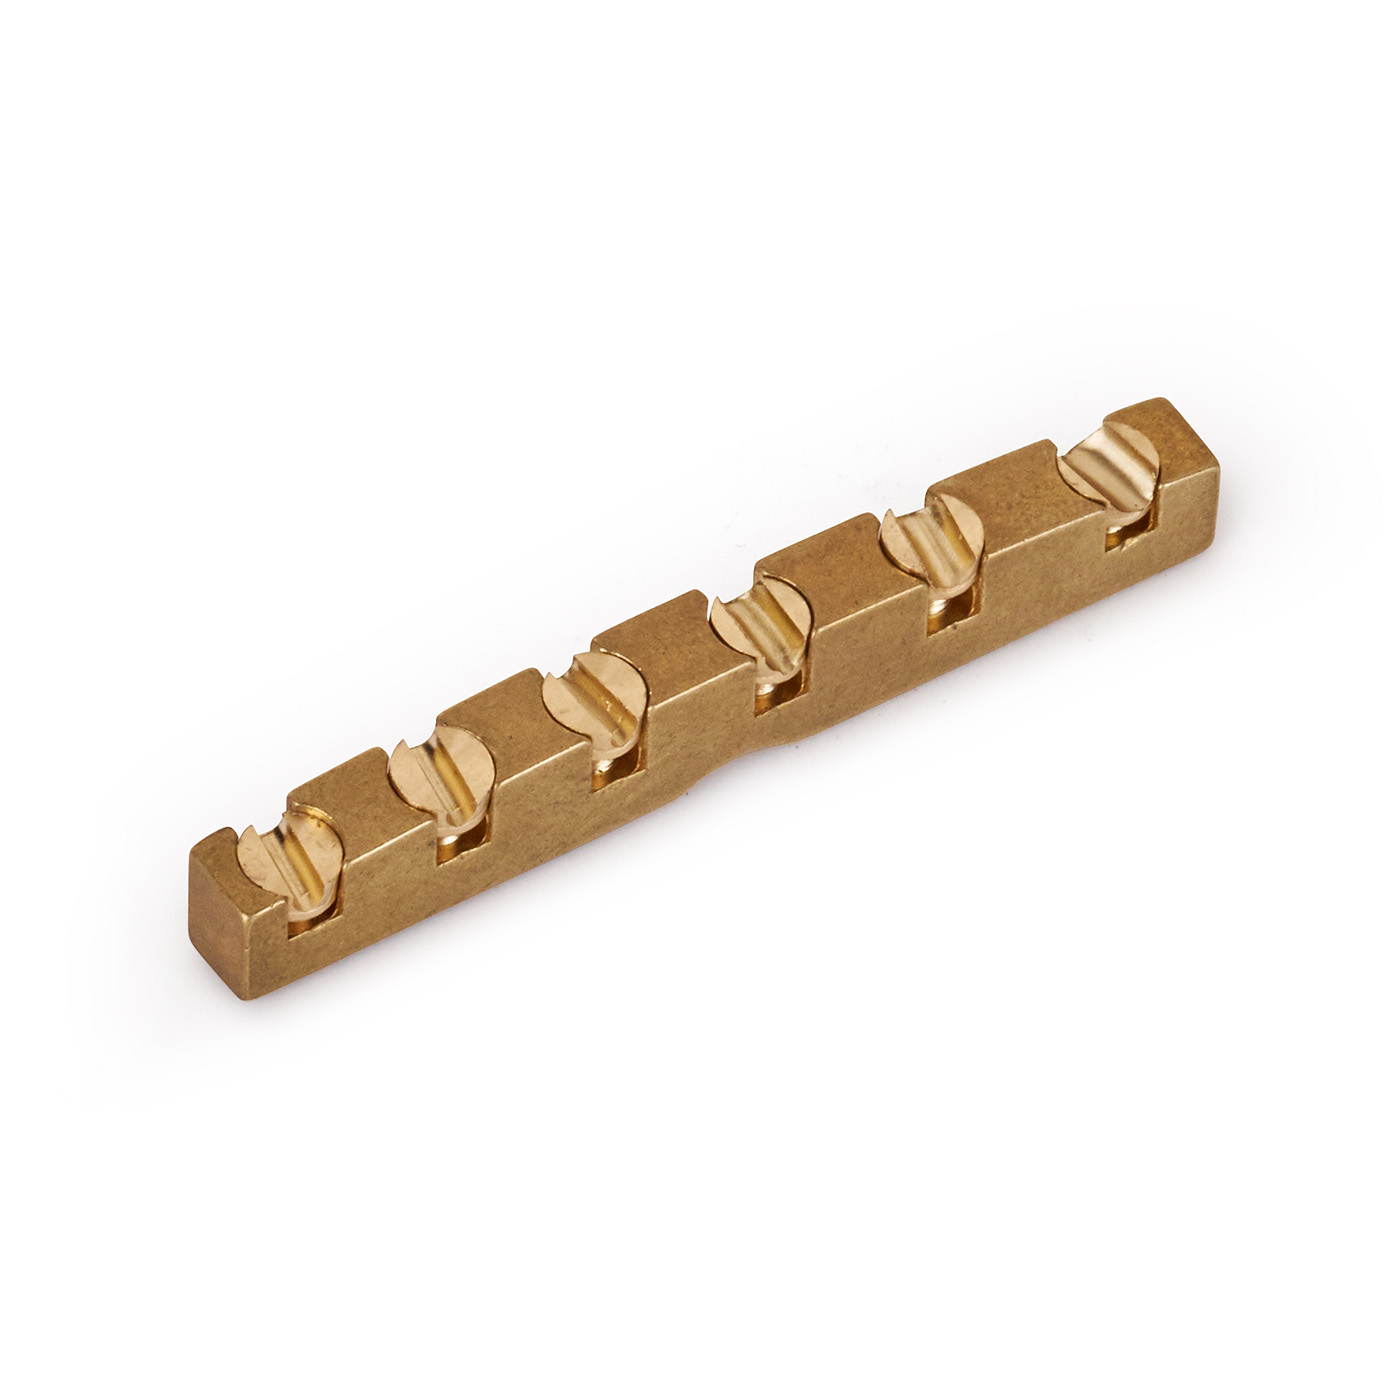 Warwick Parts - Just-A-Nut, 6-String, 55 mm width - Brass